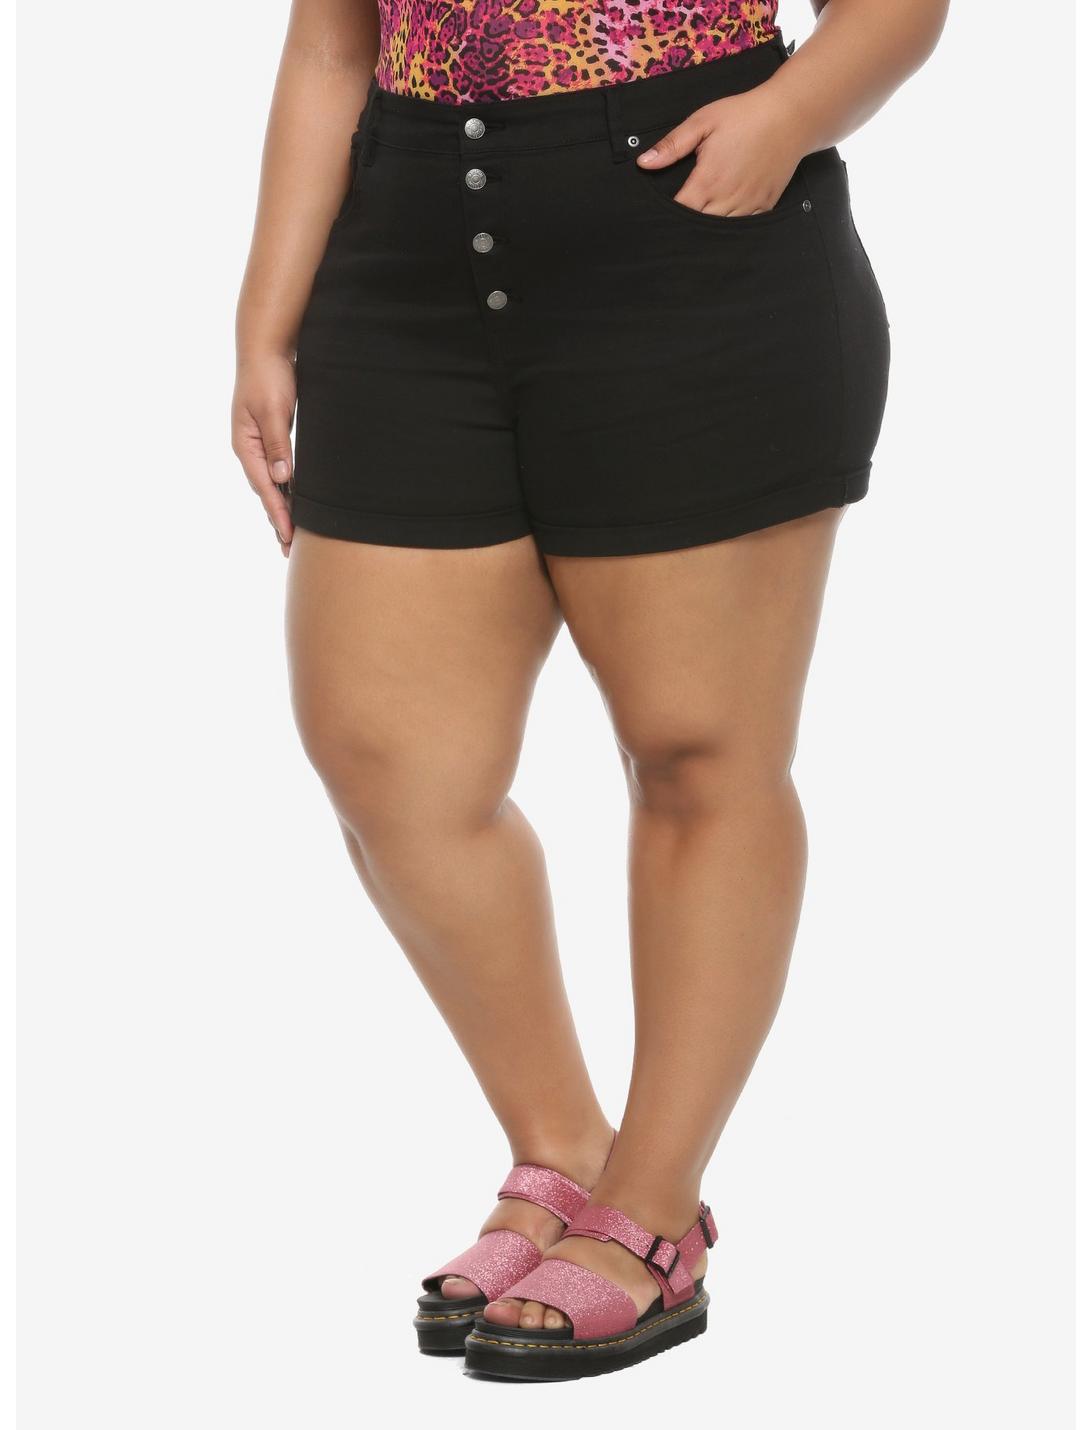 HT Denim Black Ultra Hi-Rise Button Front Shorts Plus Size, BLACK, hi-res